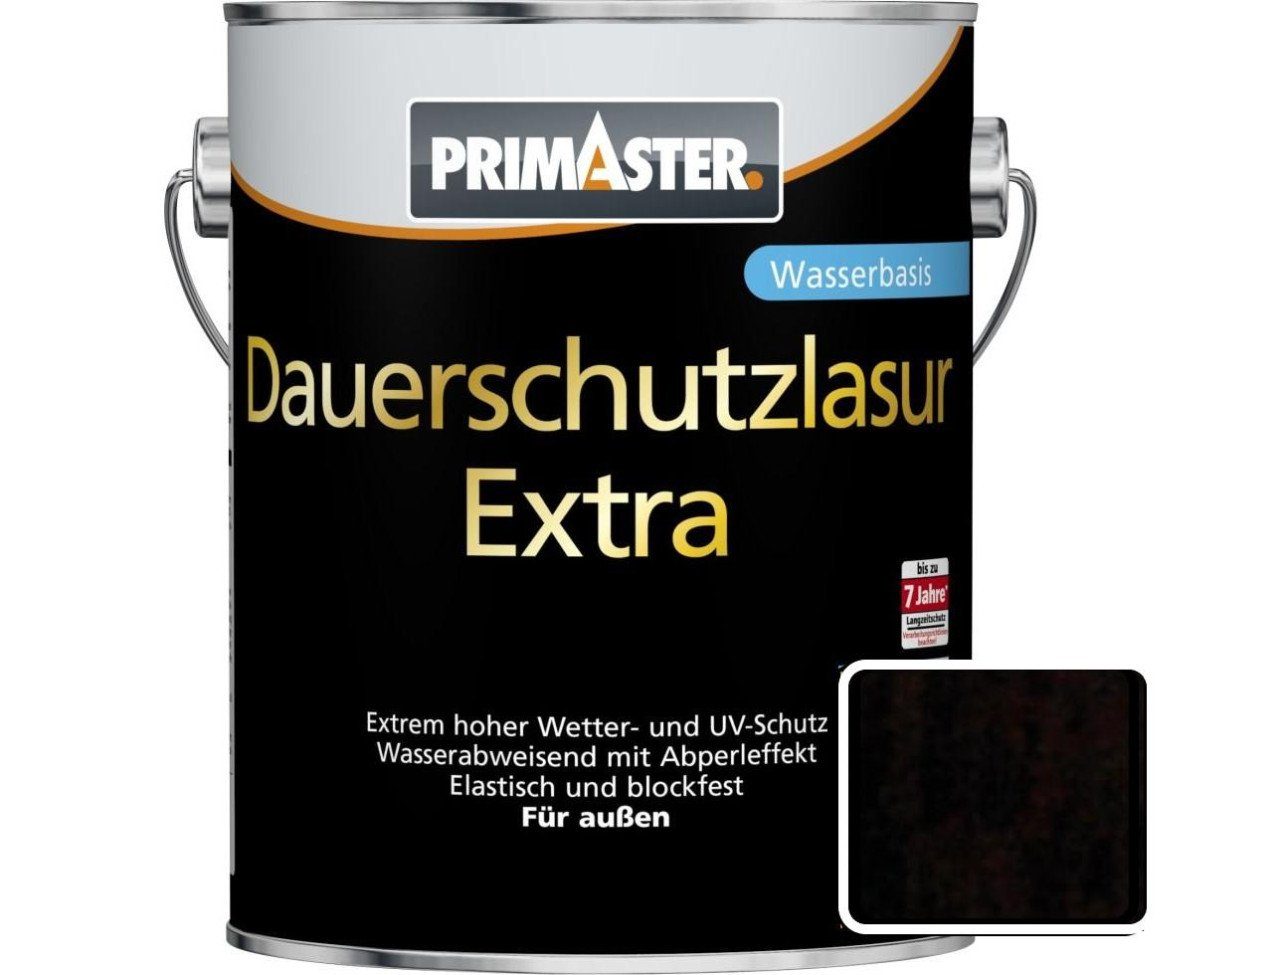 Extra ml Dauerschutzlasur palisander Primaster Lasur Primaster 750